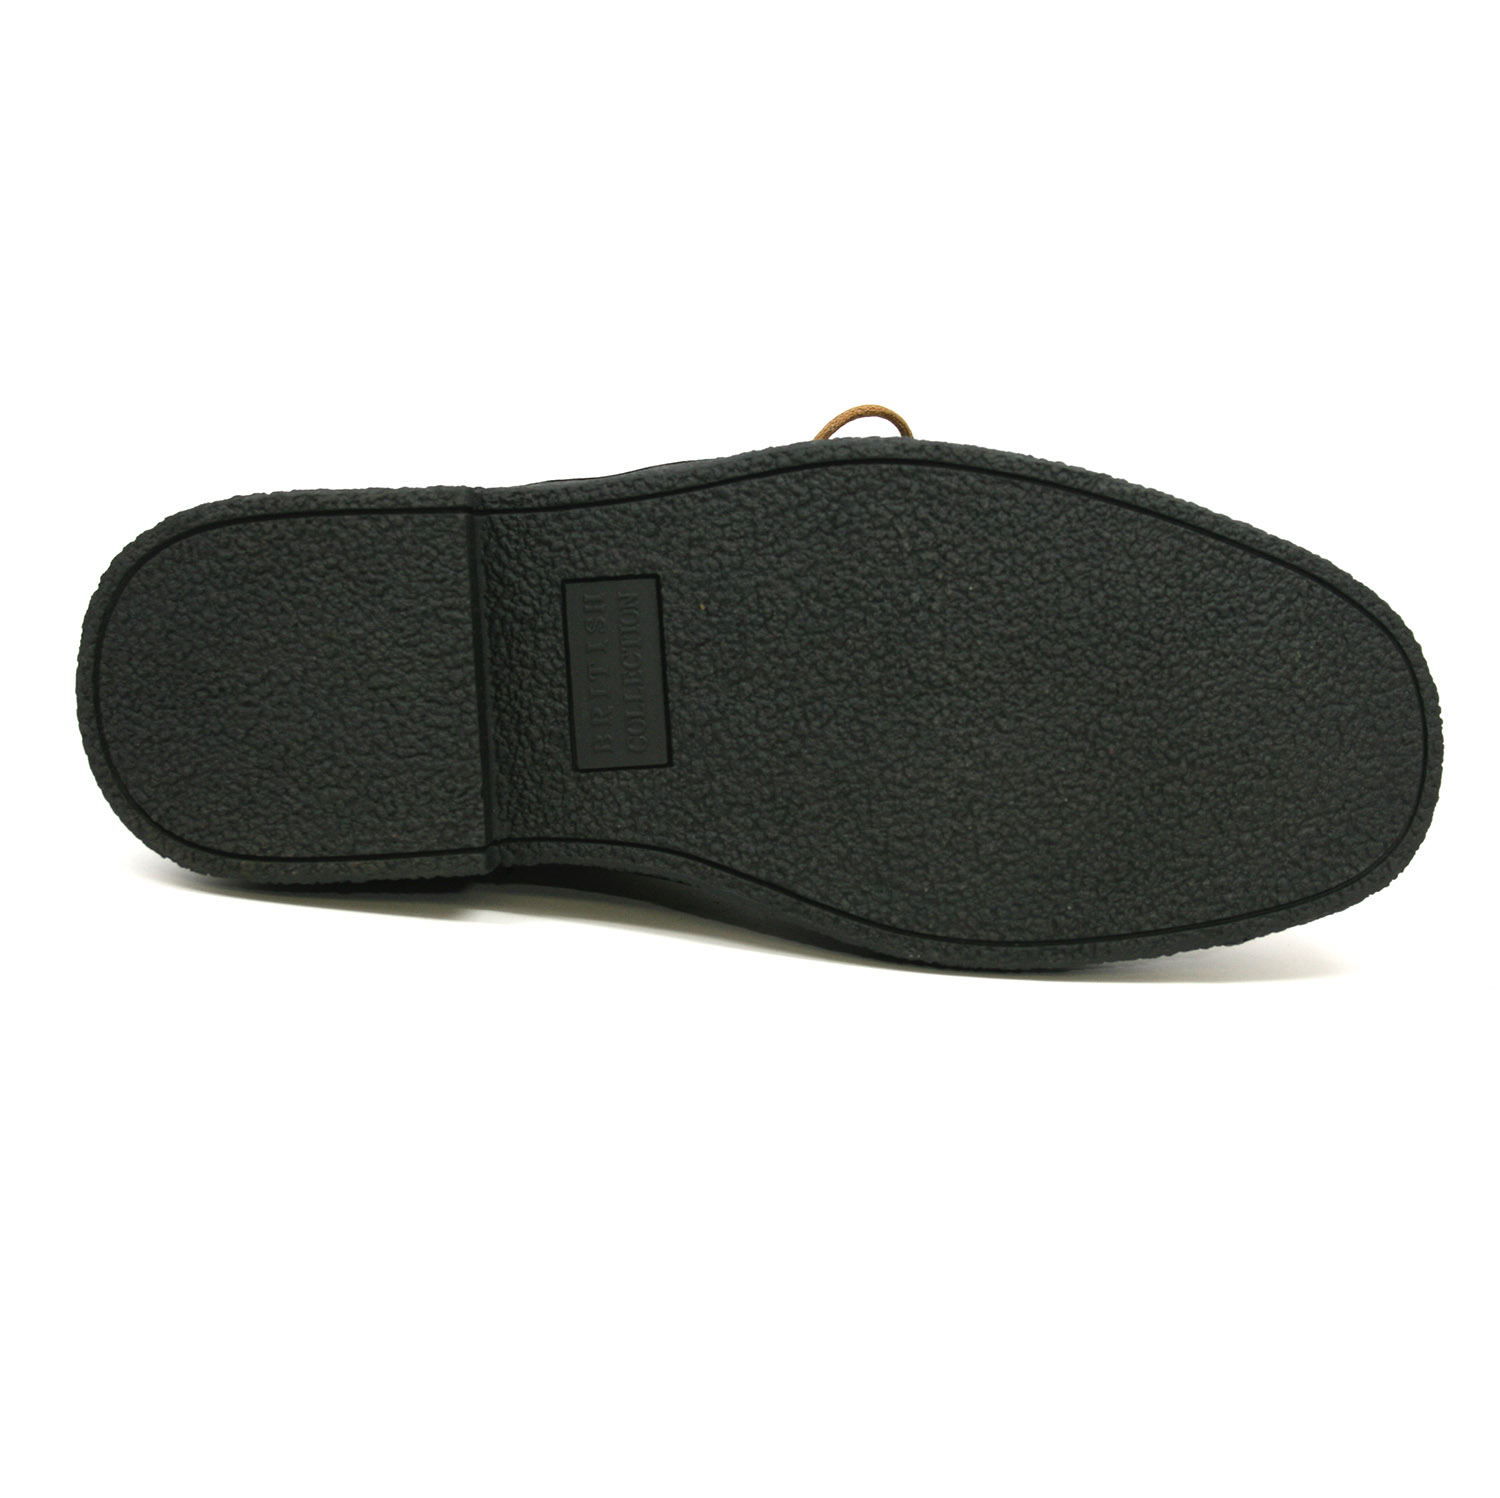 Classic Playboy Chukka Boot Olive Leather [1226-57] - $118.00 : British ...